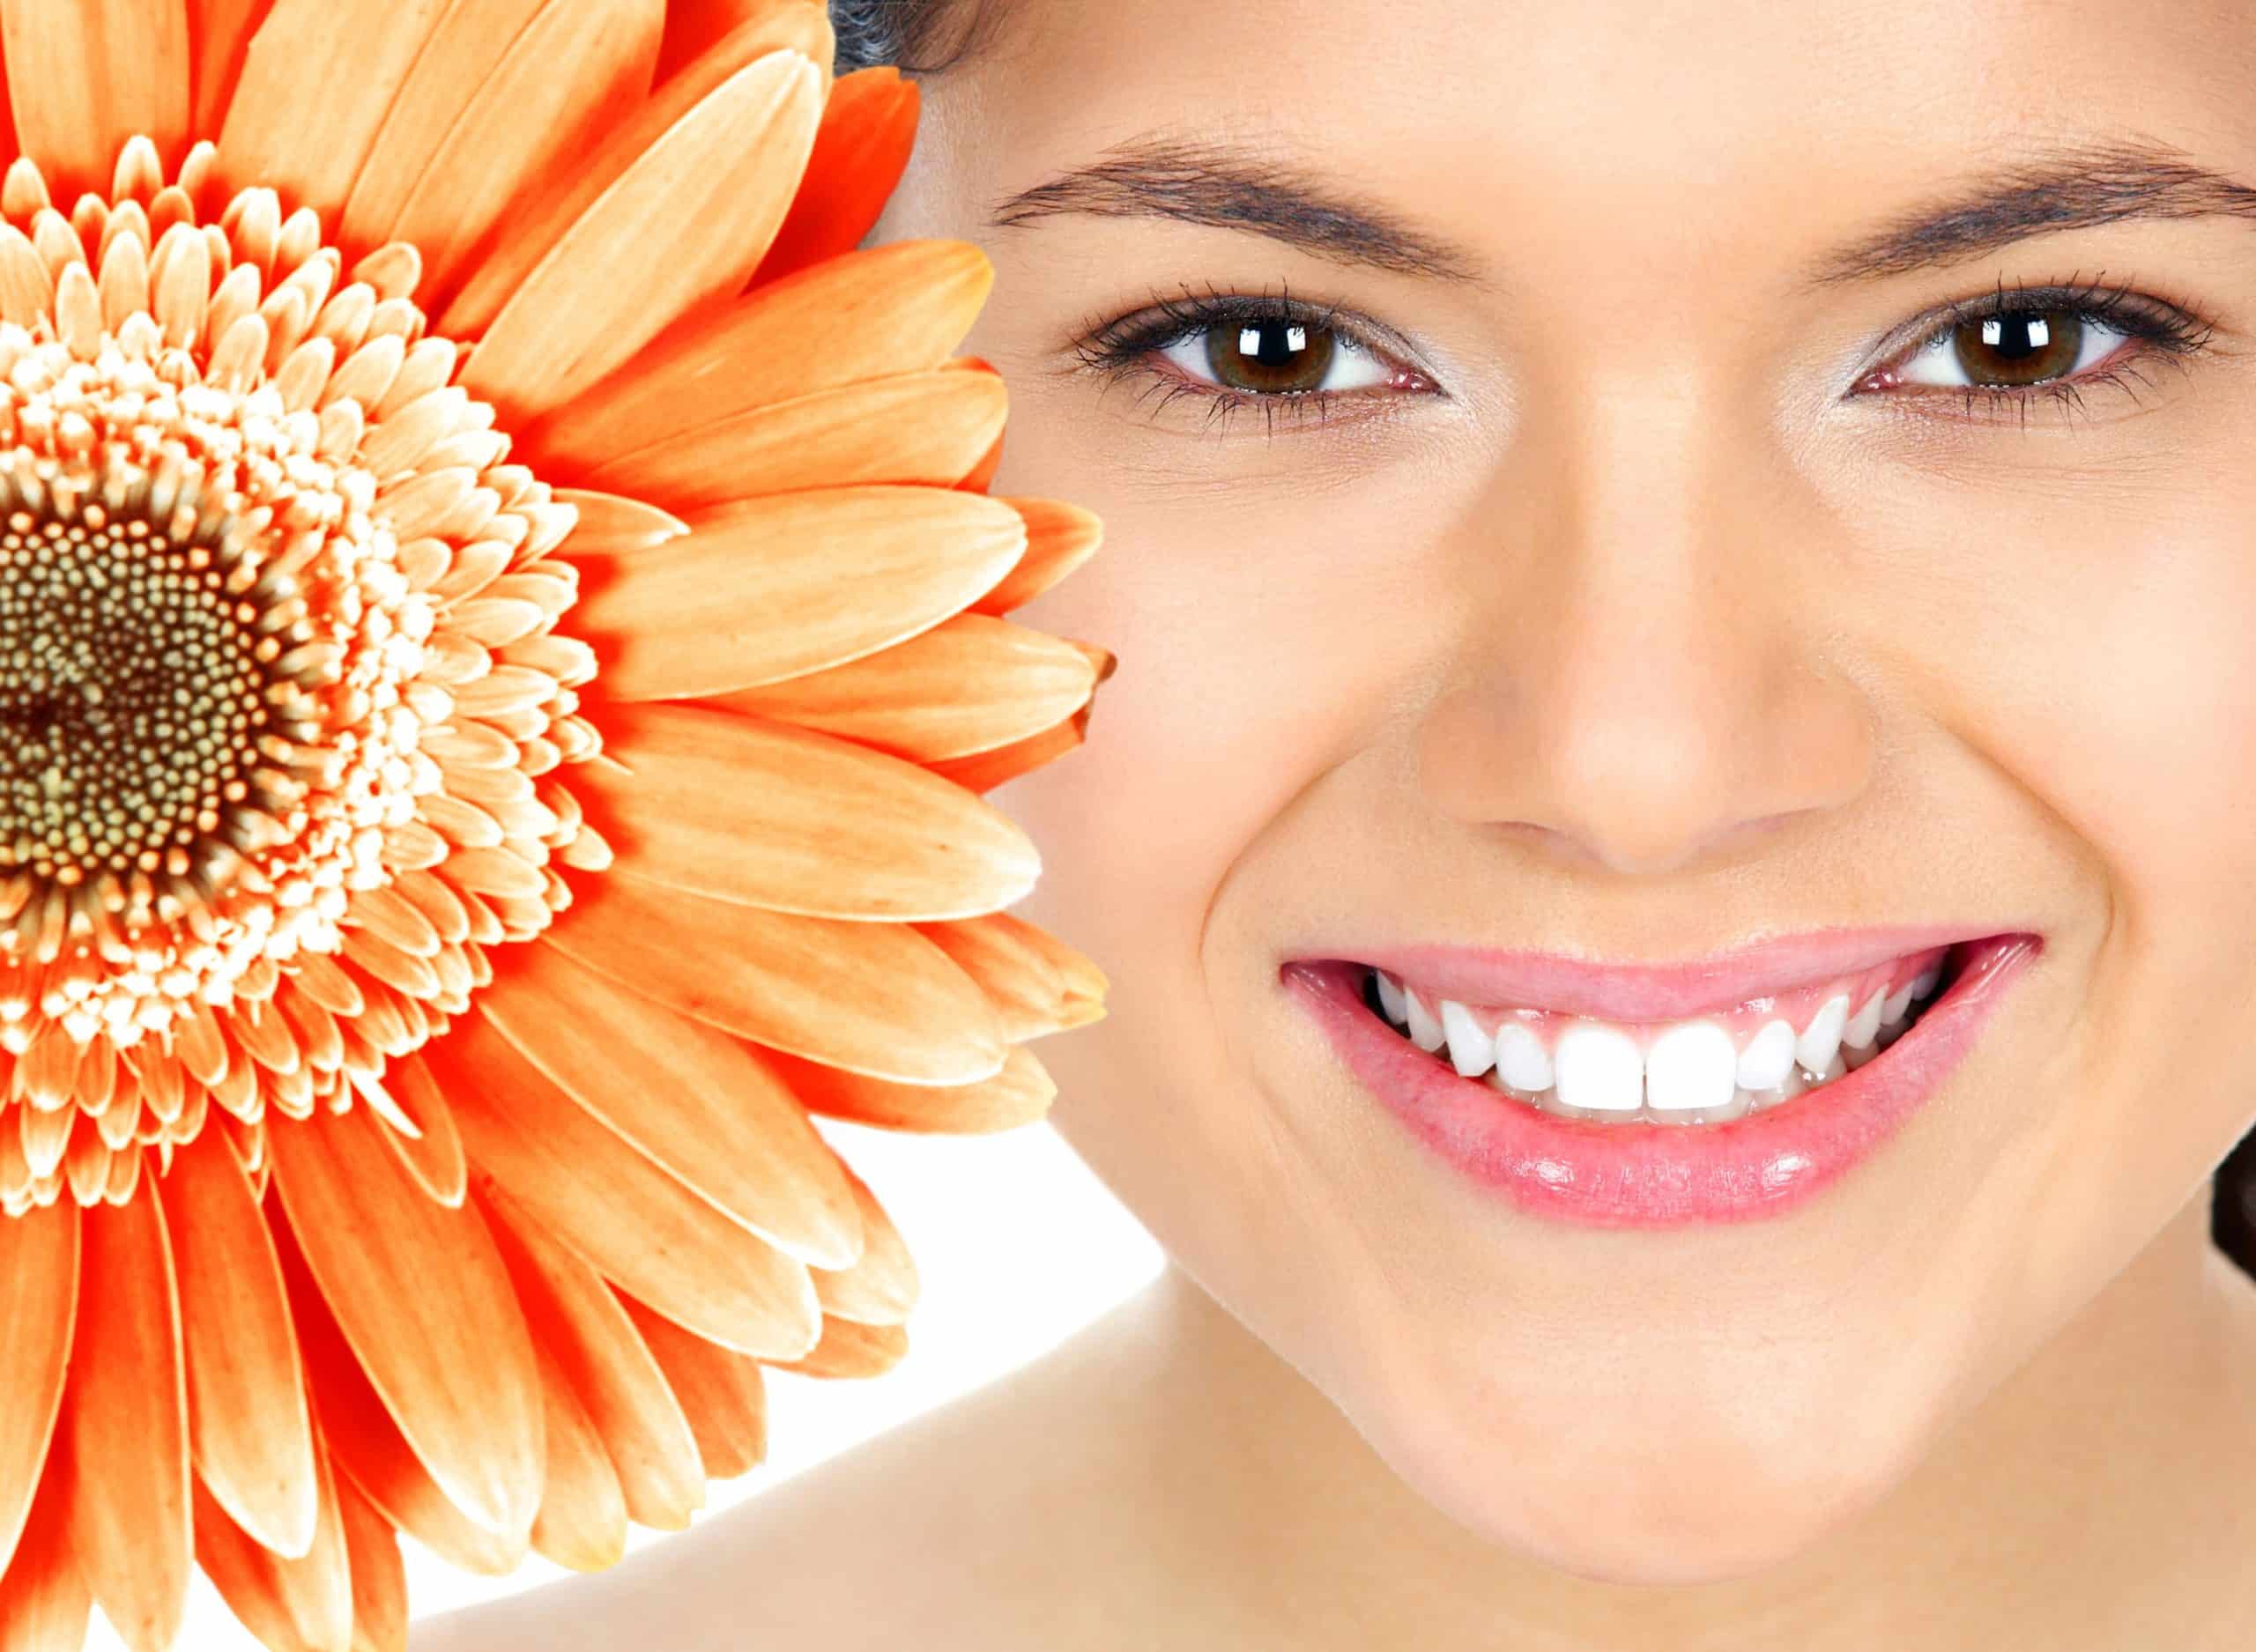 Woman smiling next to a giant orange flower on a white background